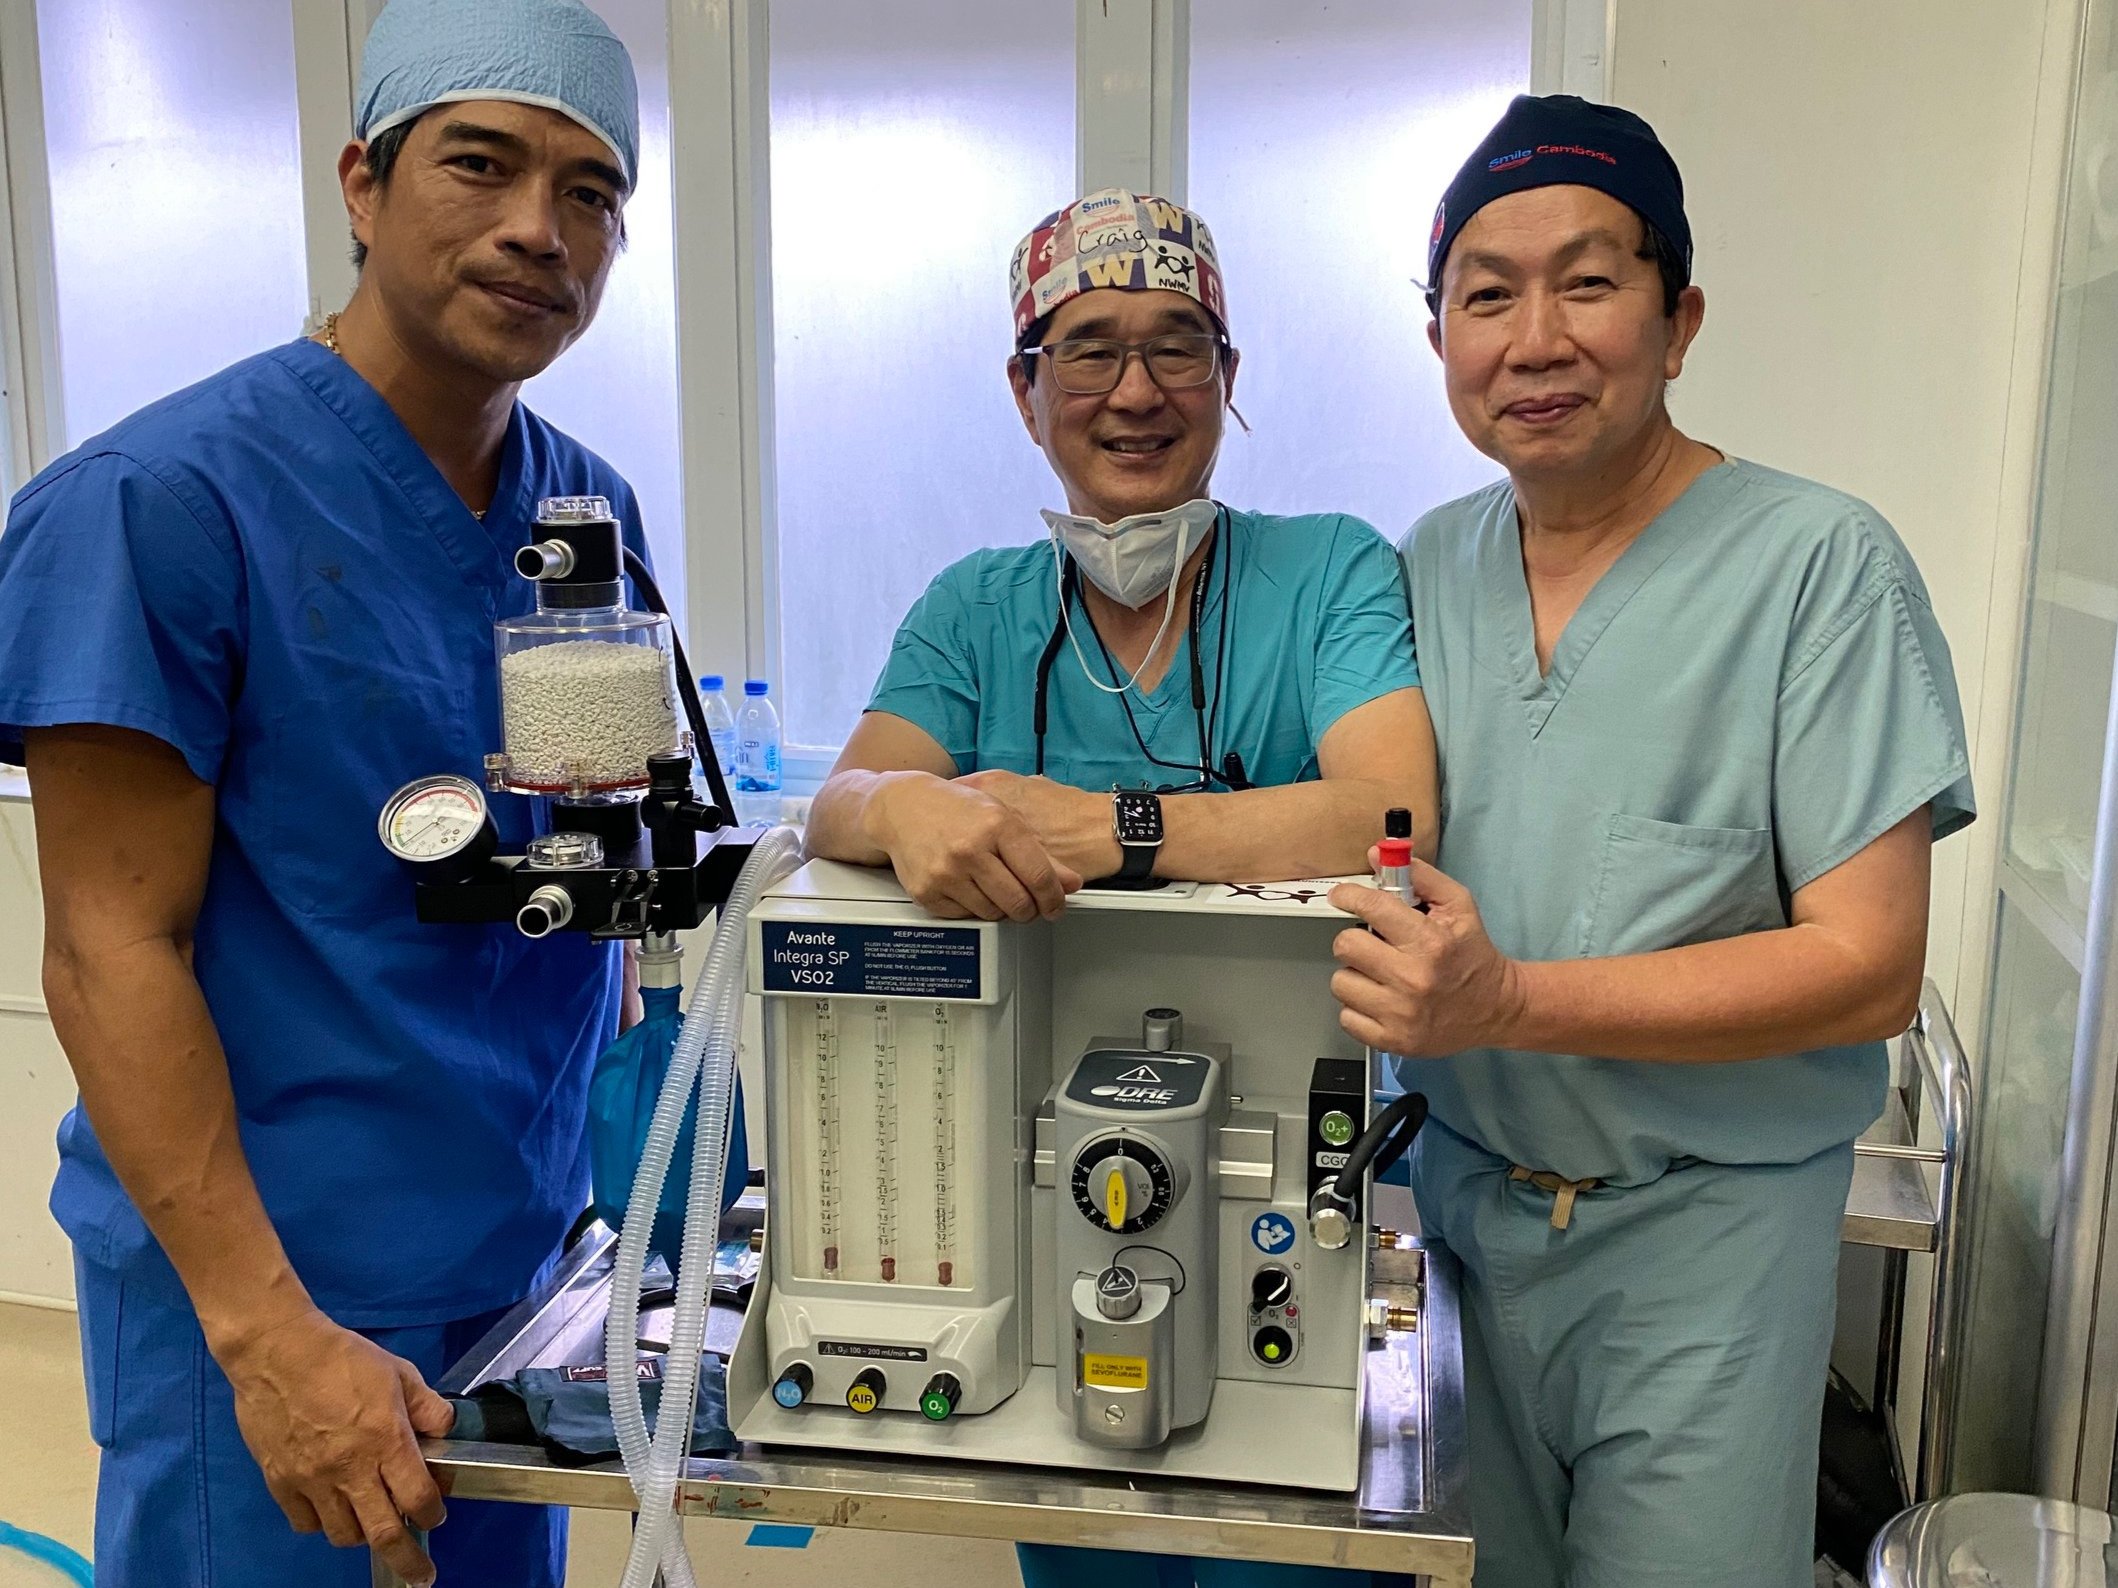 A new anesthesia machine donation